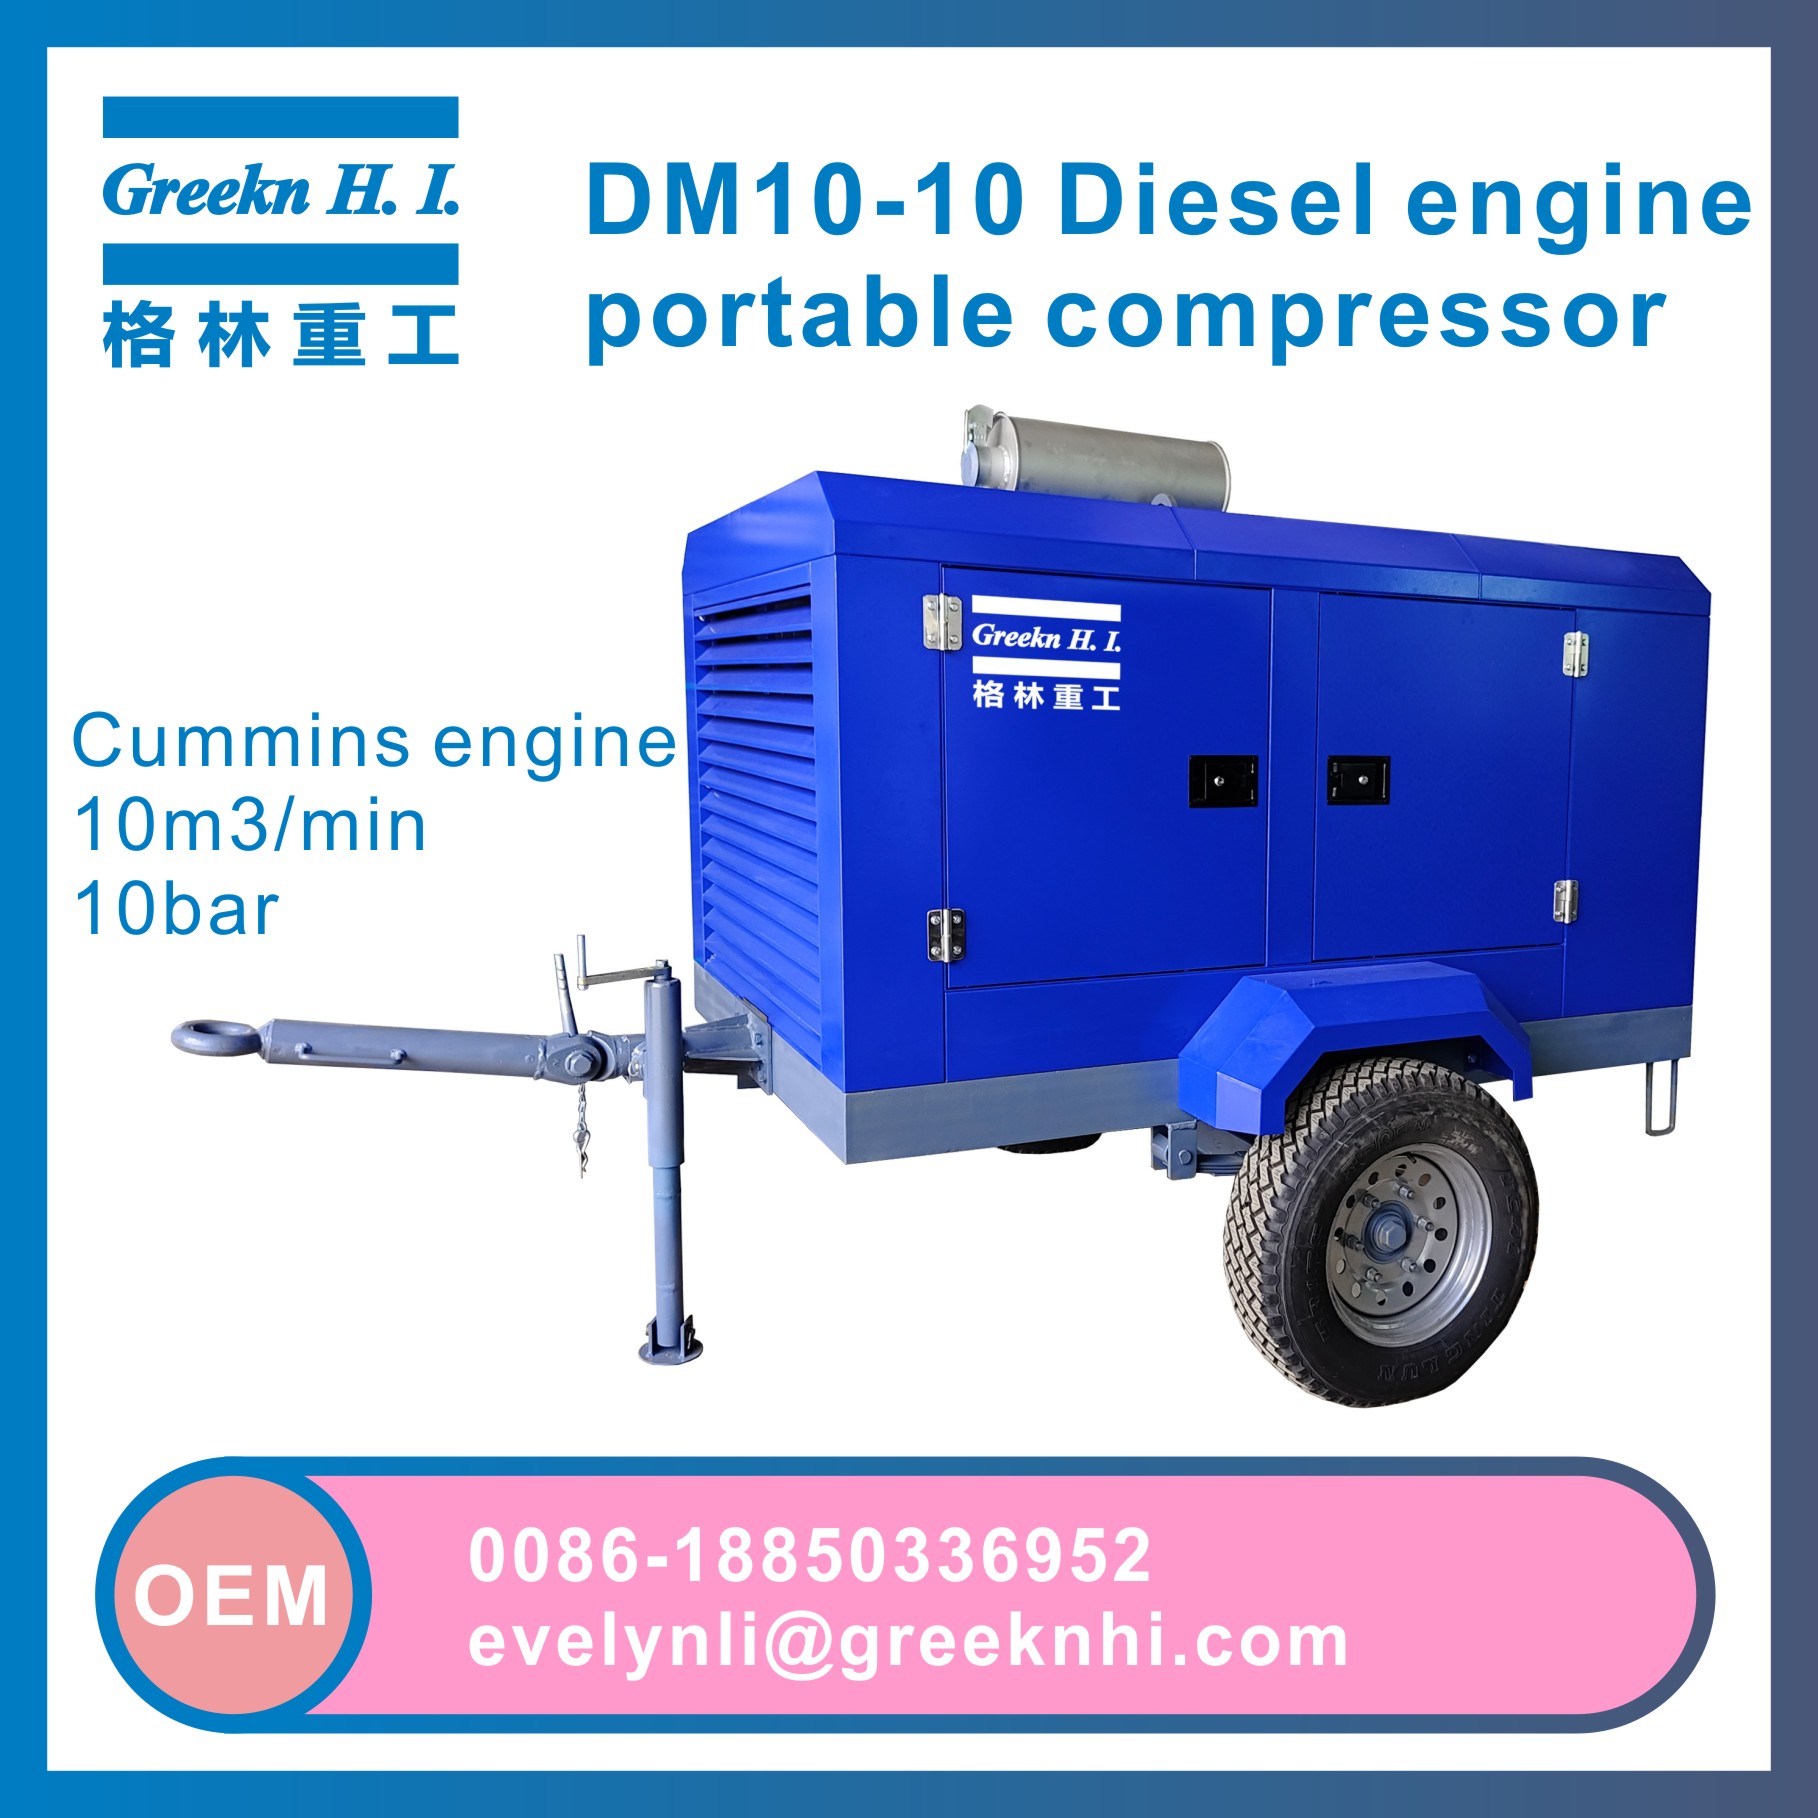 Greeknhi Diesel Engine Portable Compressor DM10-10 10m3/min 10bar Portable Screw Air Compressor